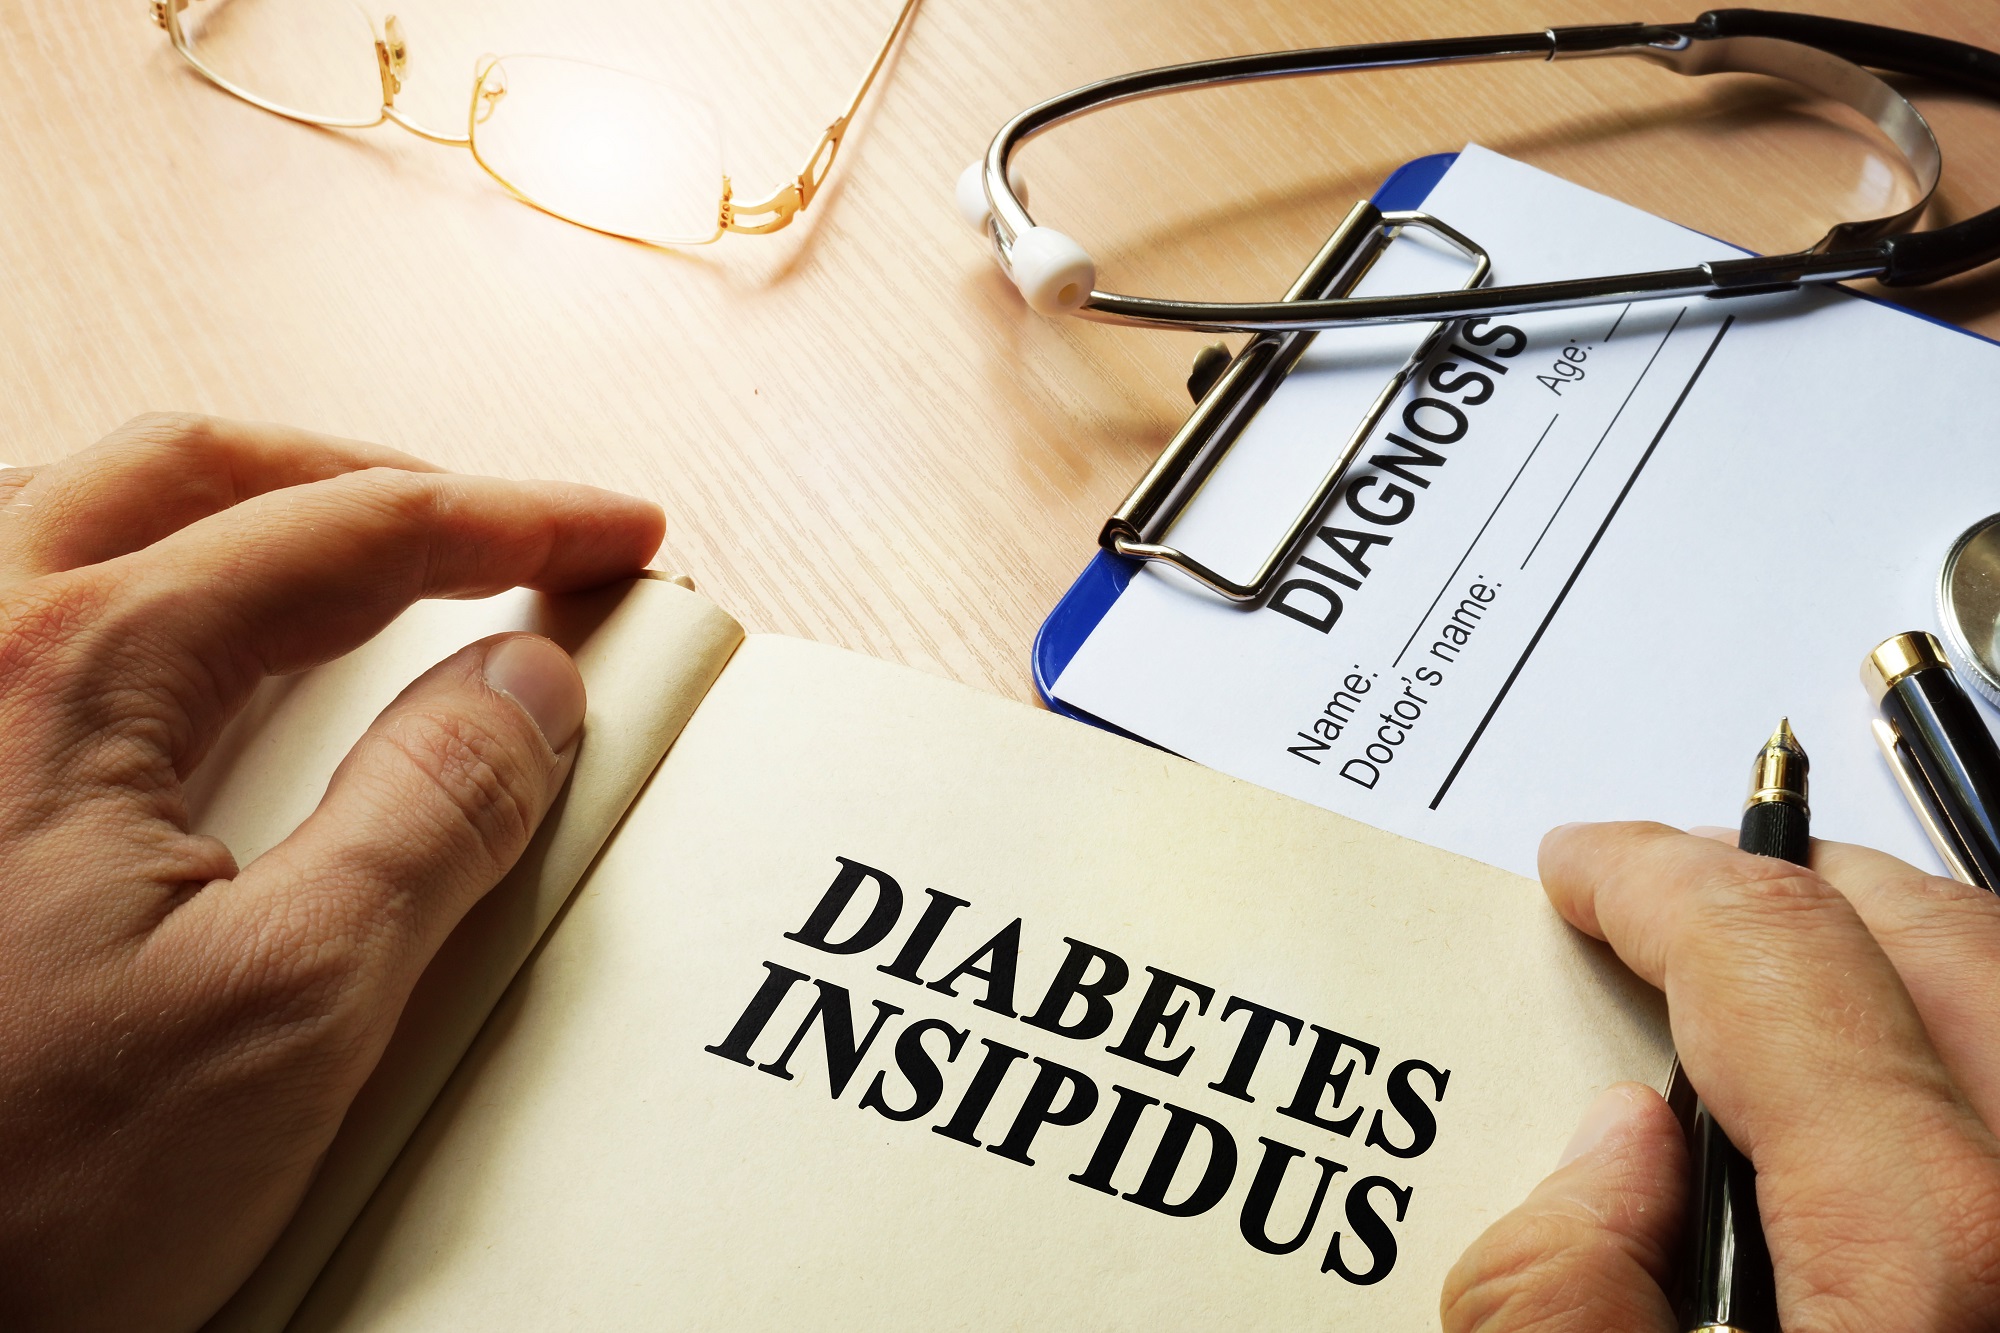 Diabetes Insipidus Causes Symptoms And Treatment